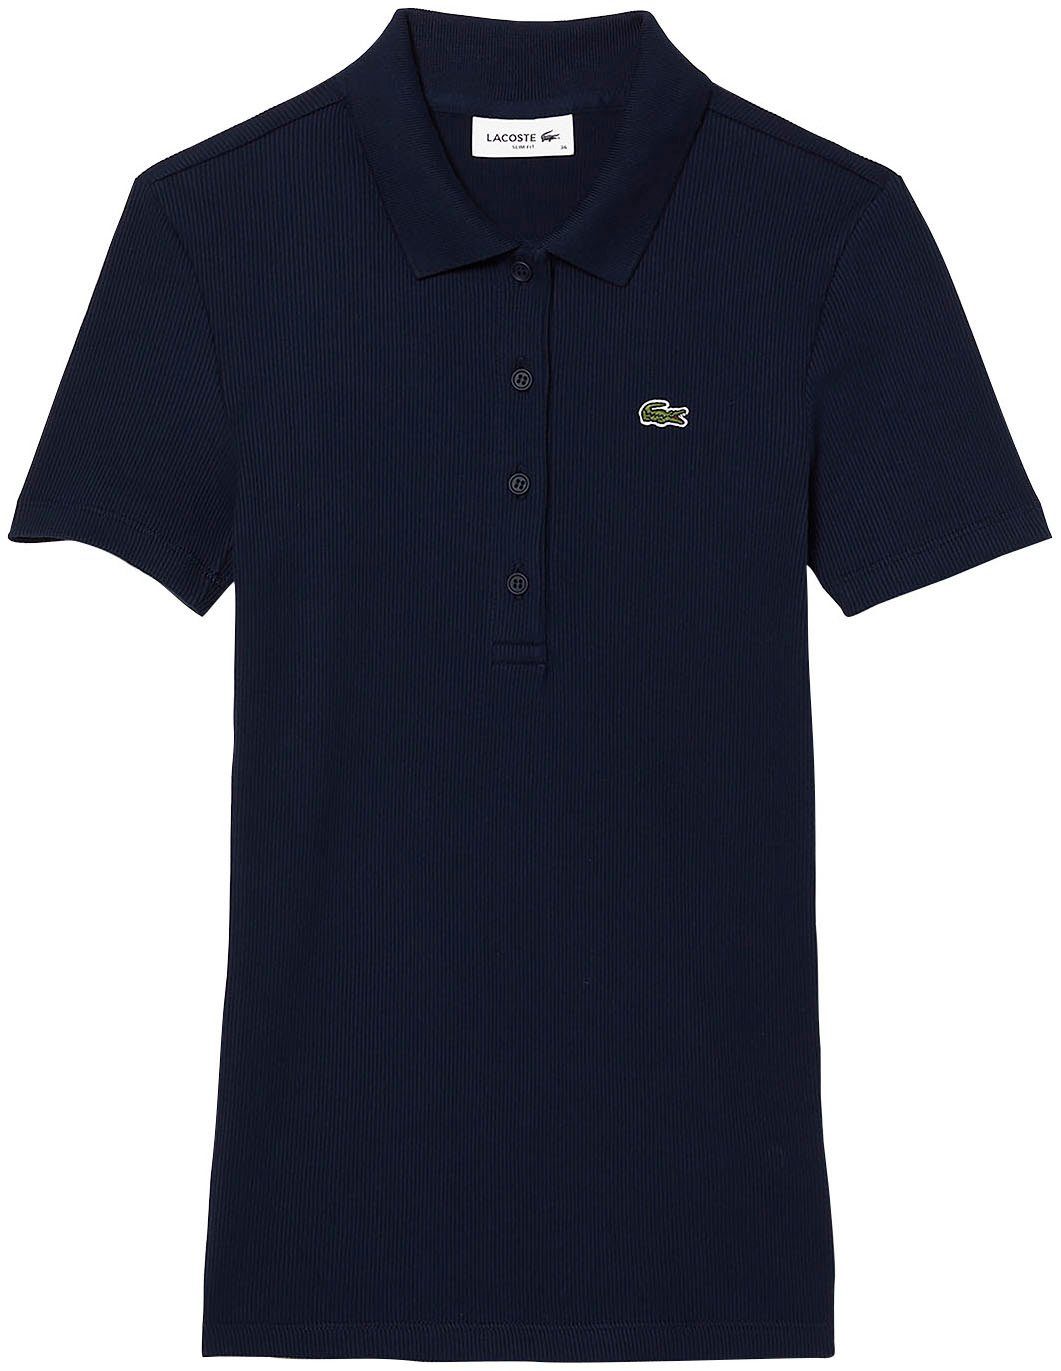 Lacoste Poloshirt navy blue | Poloshirts